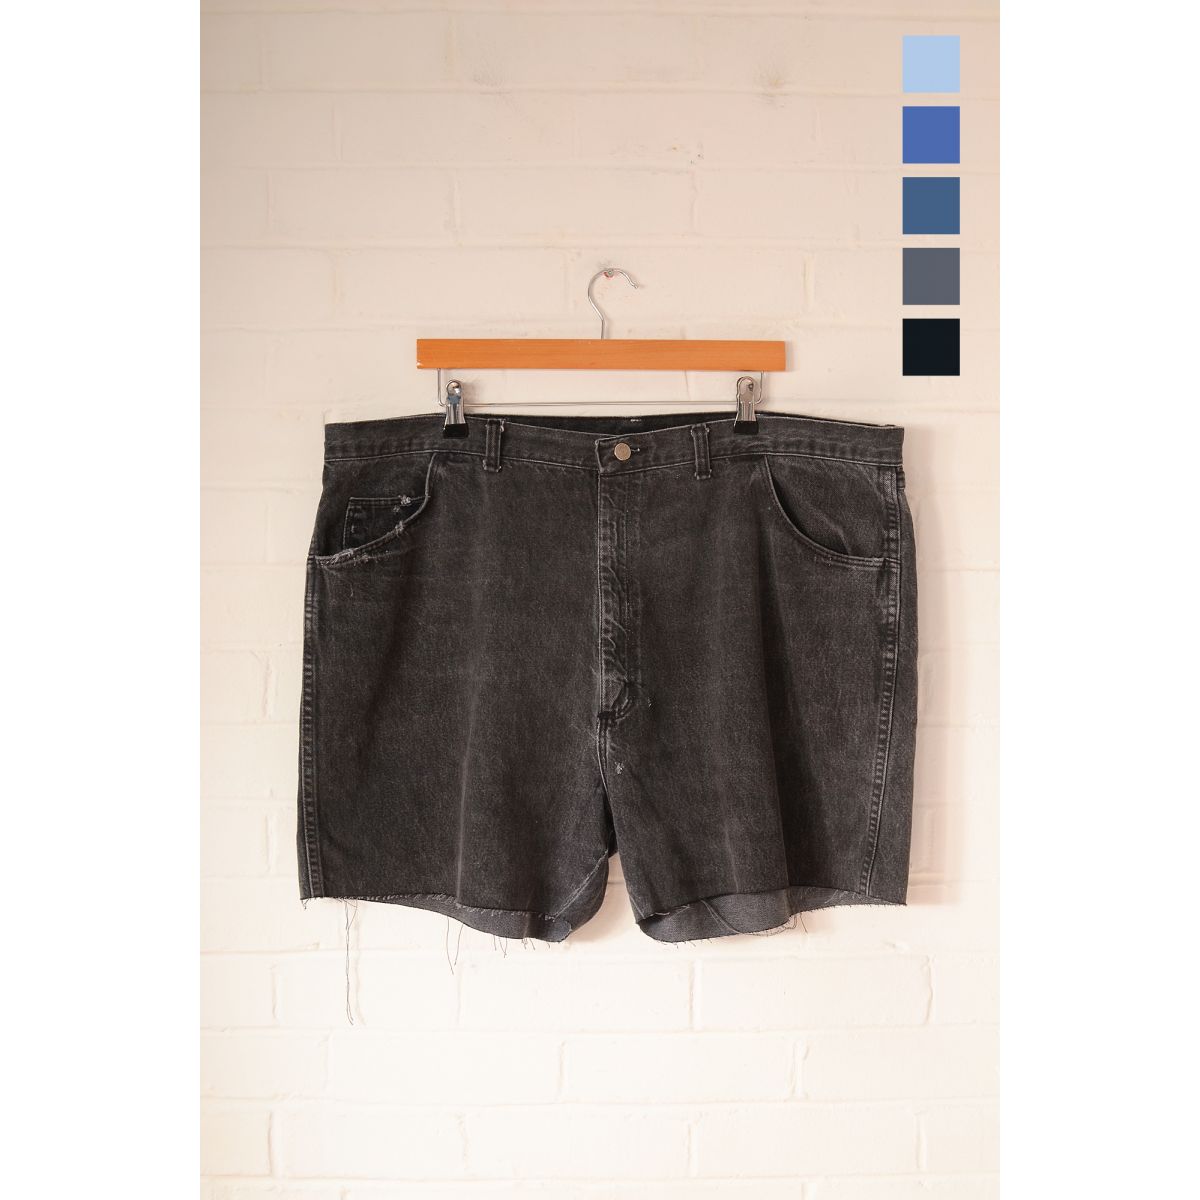 WRANGLER Distressed High Waisted Denim Hotpant Shorts (Plus Size) Various Colours & Sizes